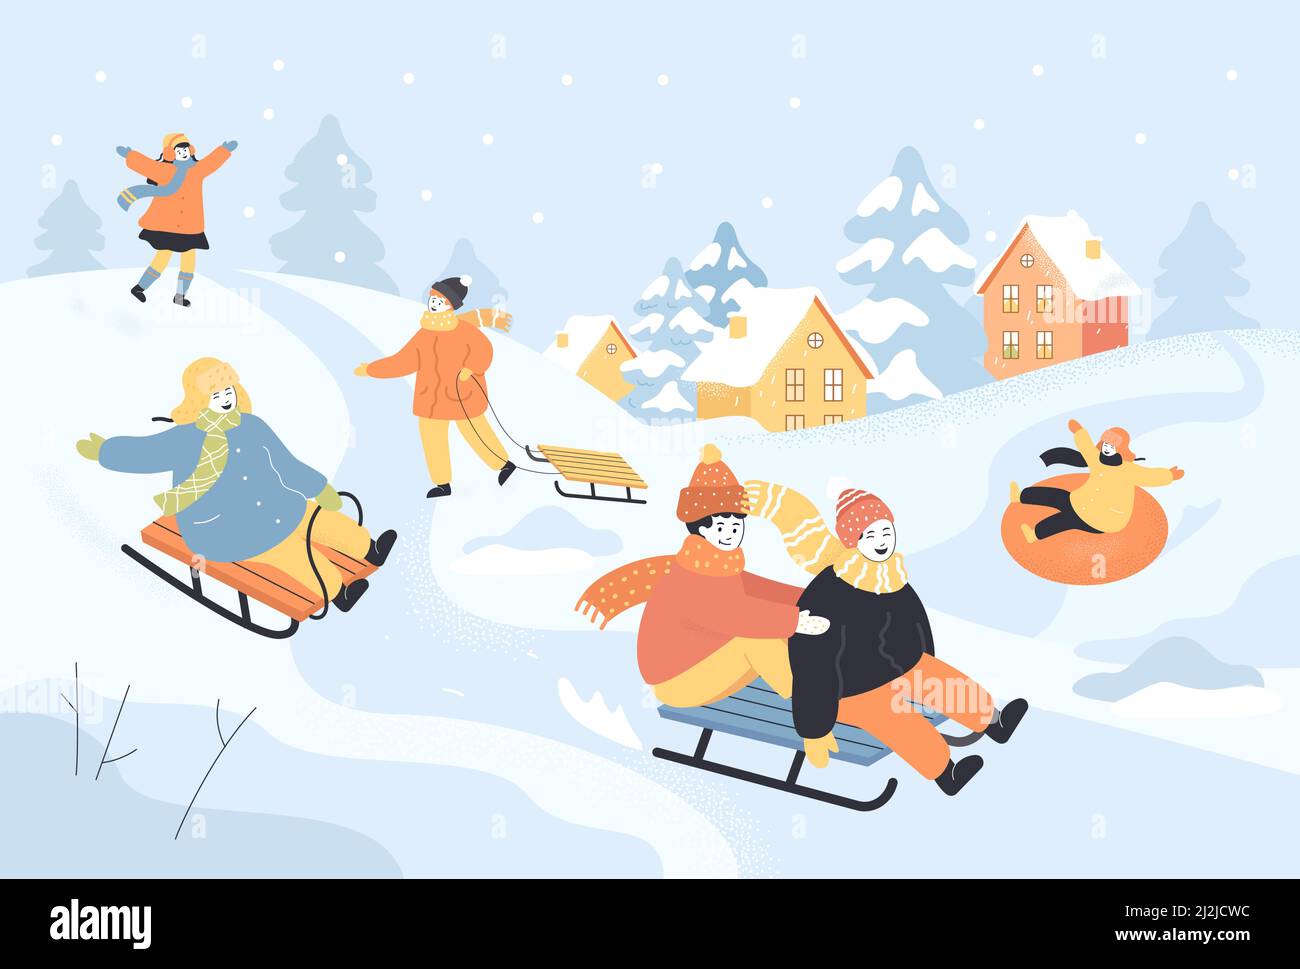 Happy cartoon kids sliding down hill on sleds. Snow falling, children having fun while sledding down slide flat vector illustration. Winter activities Stock Vector